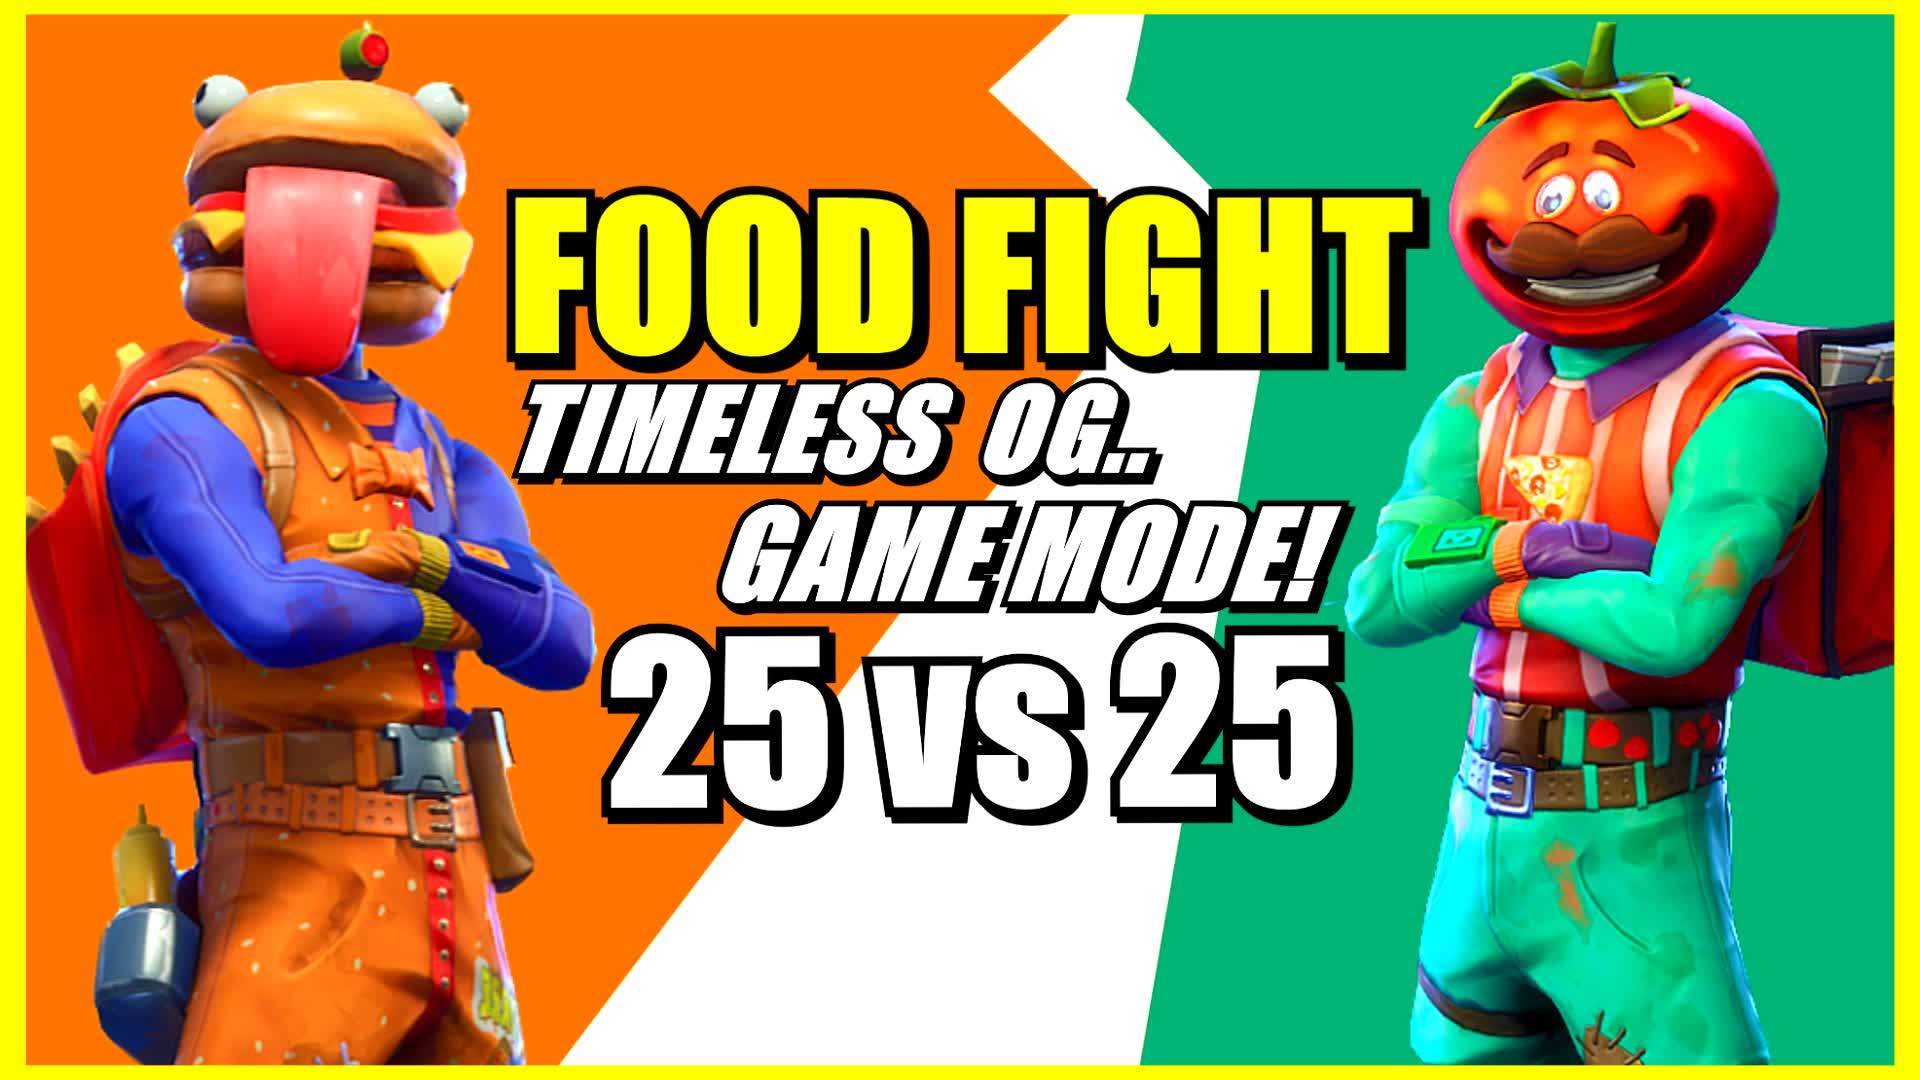 25vs25 - OG FOOD FIGHT